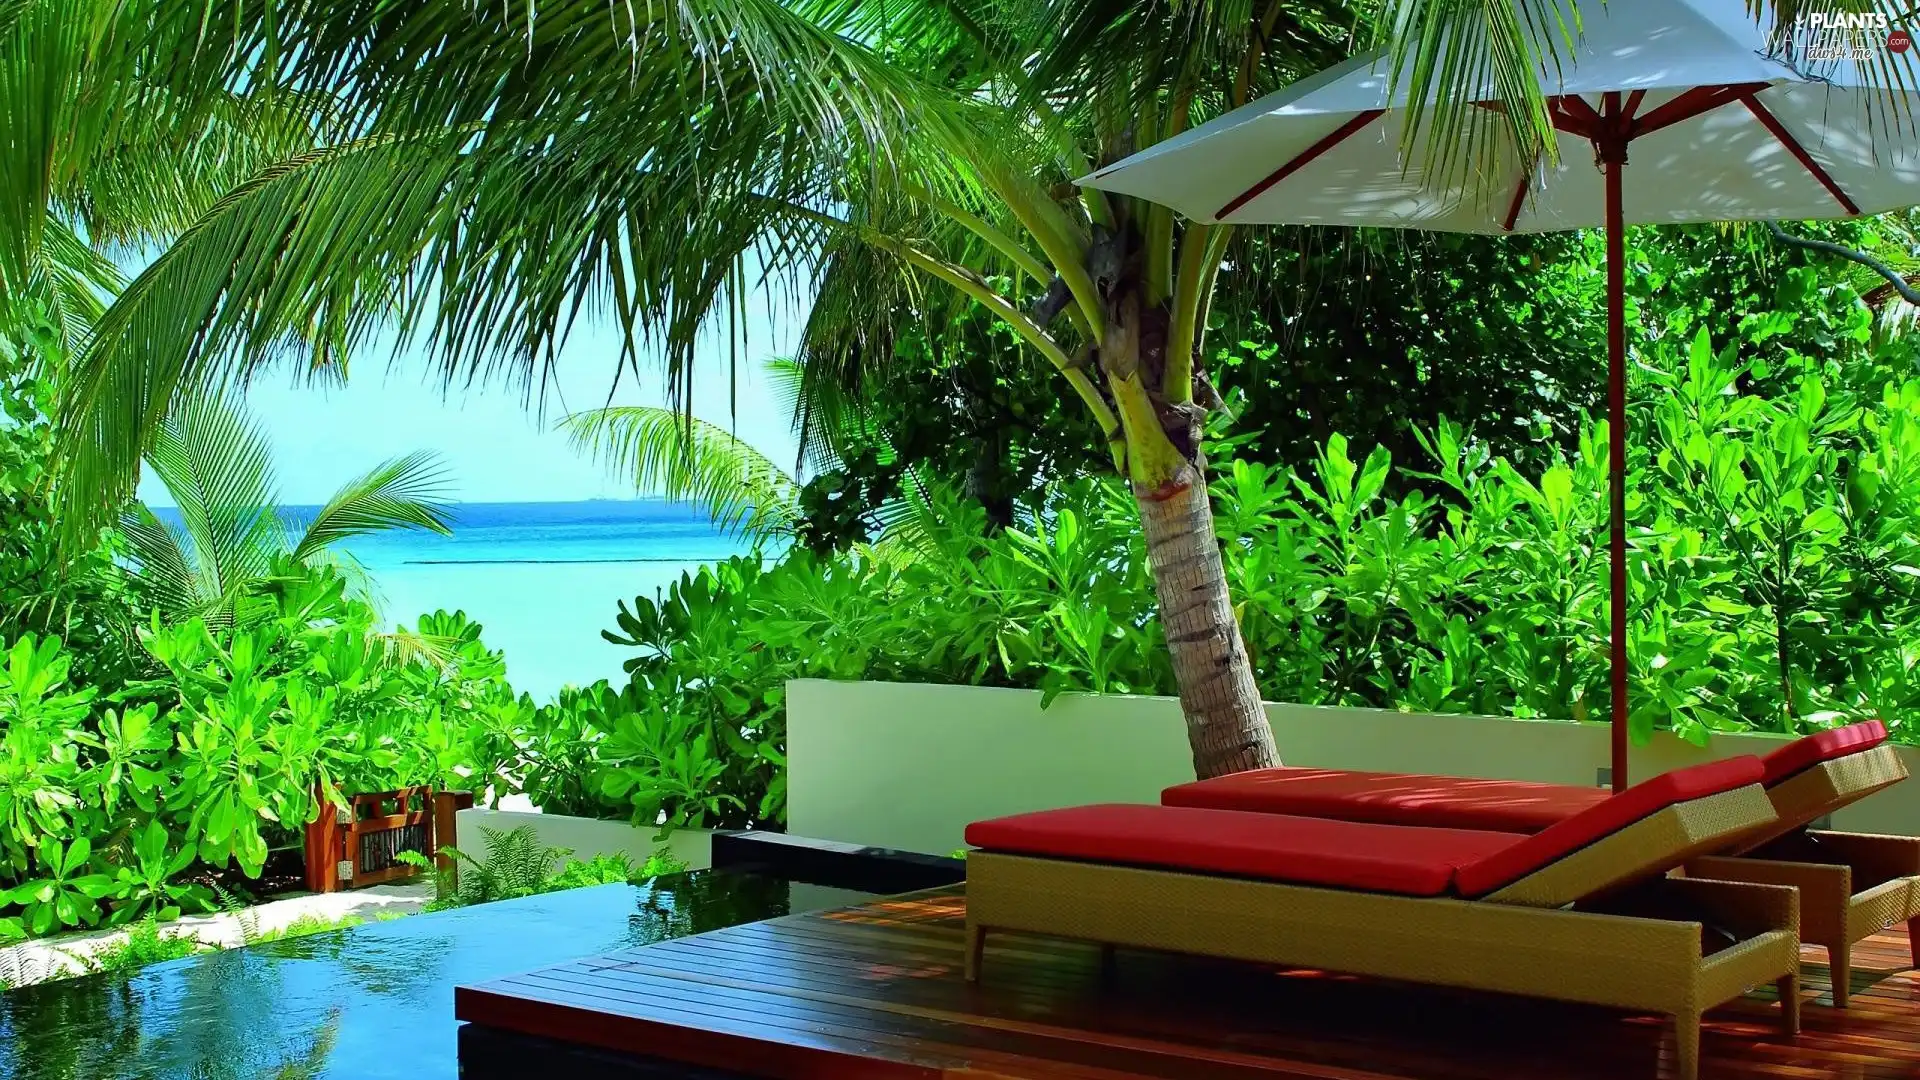 sea, deck chair, Umbrella, Palms, terrace, Pool, holiday